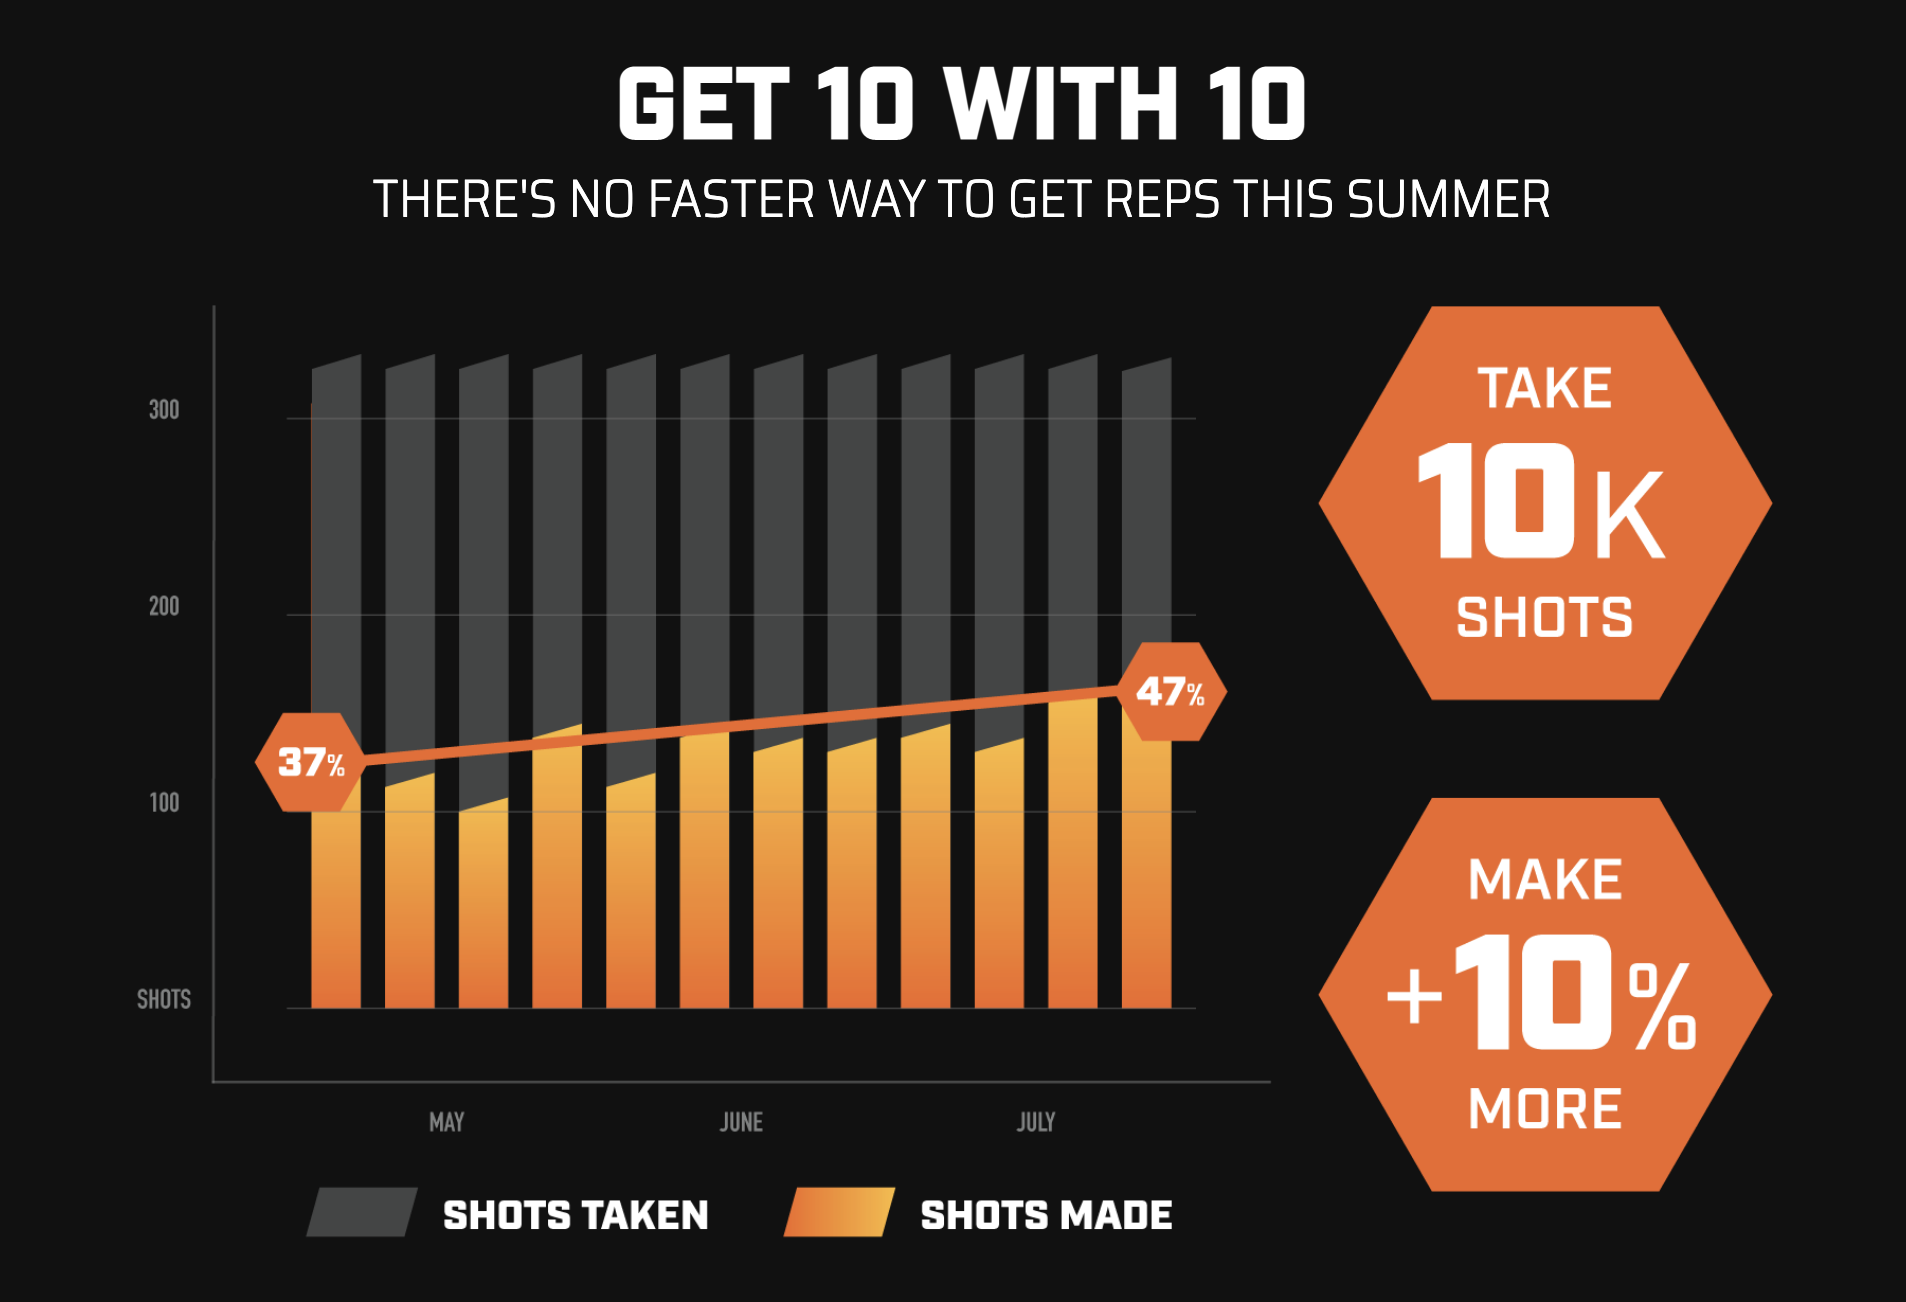 Take 10,000, Make 10% More - Can you take 30,000 Shots this summer?